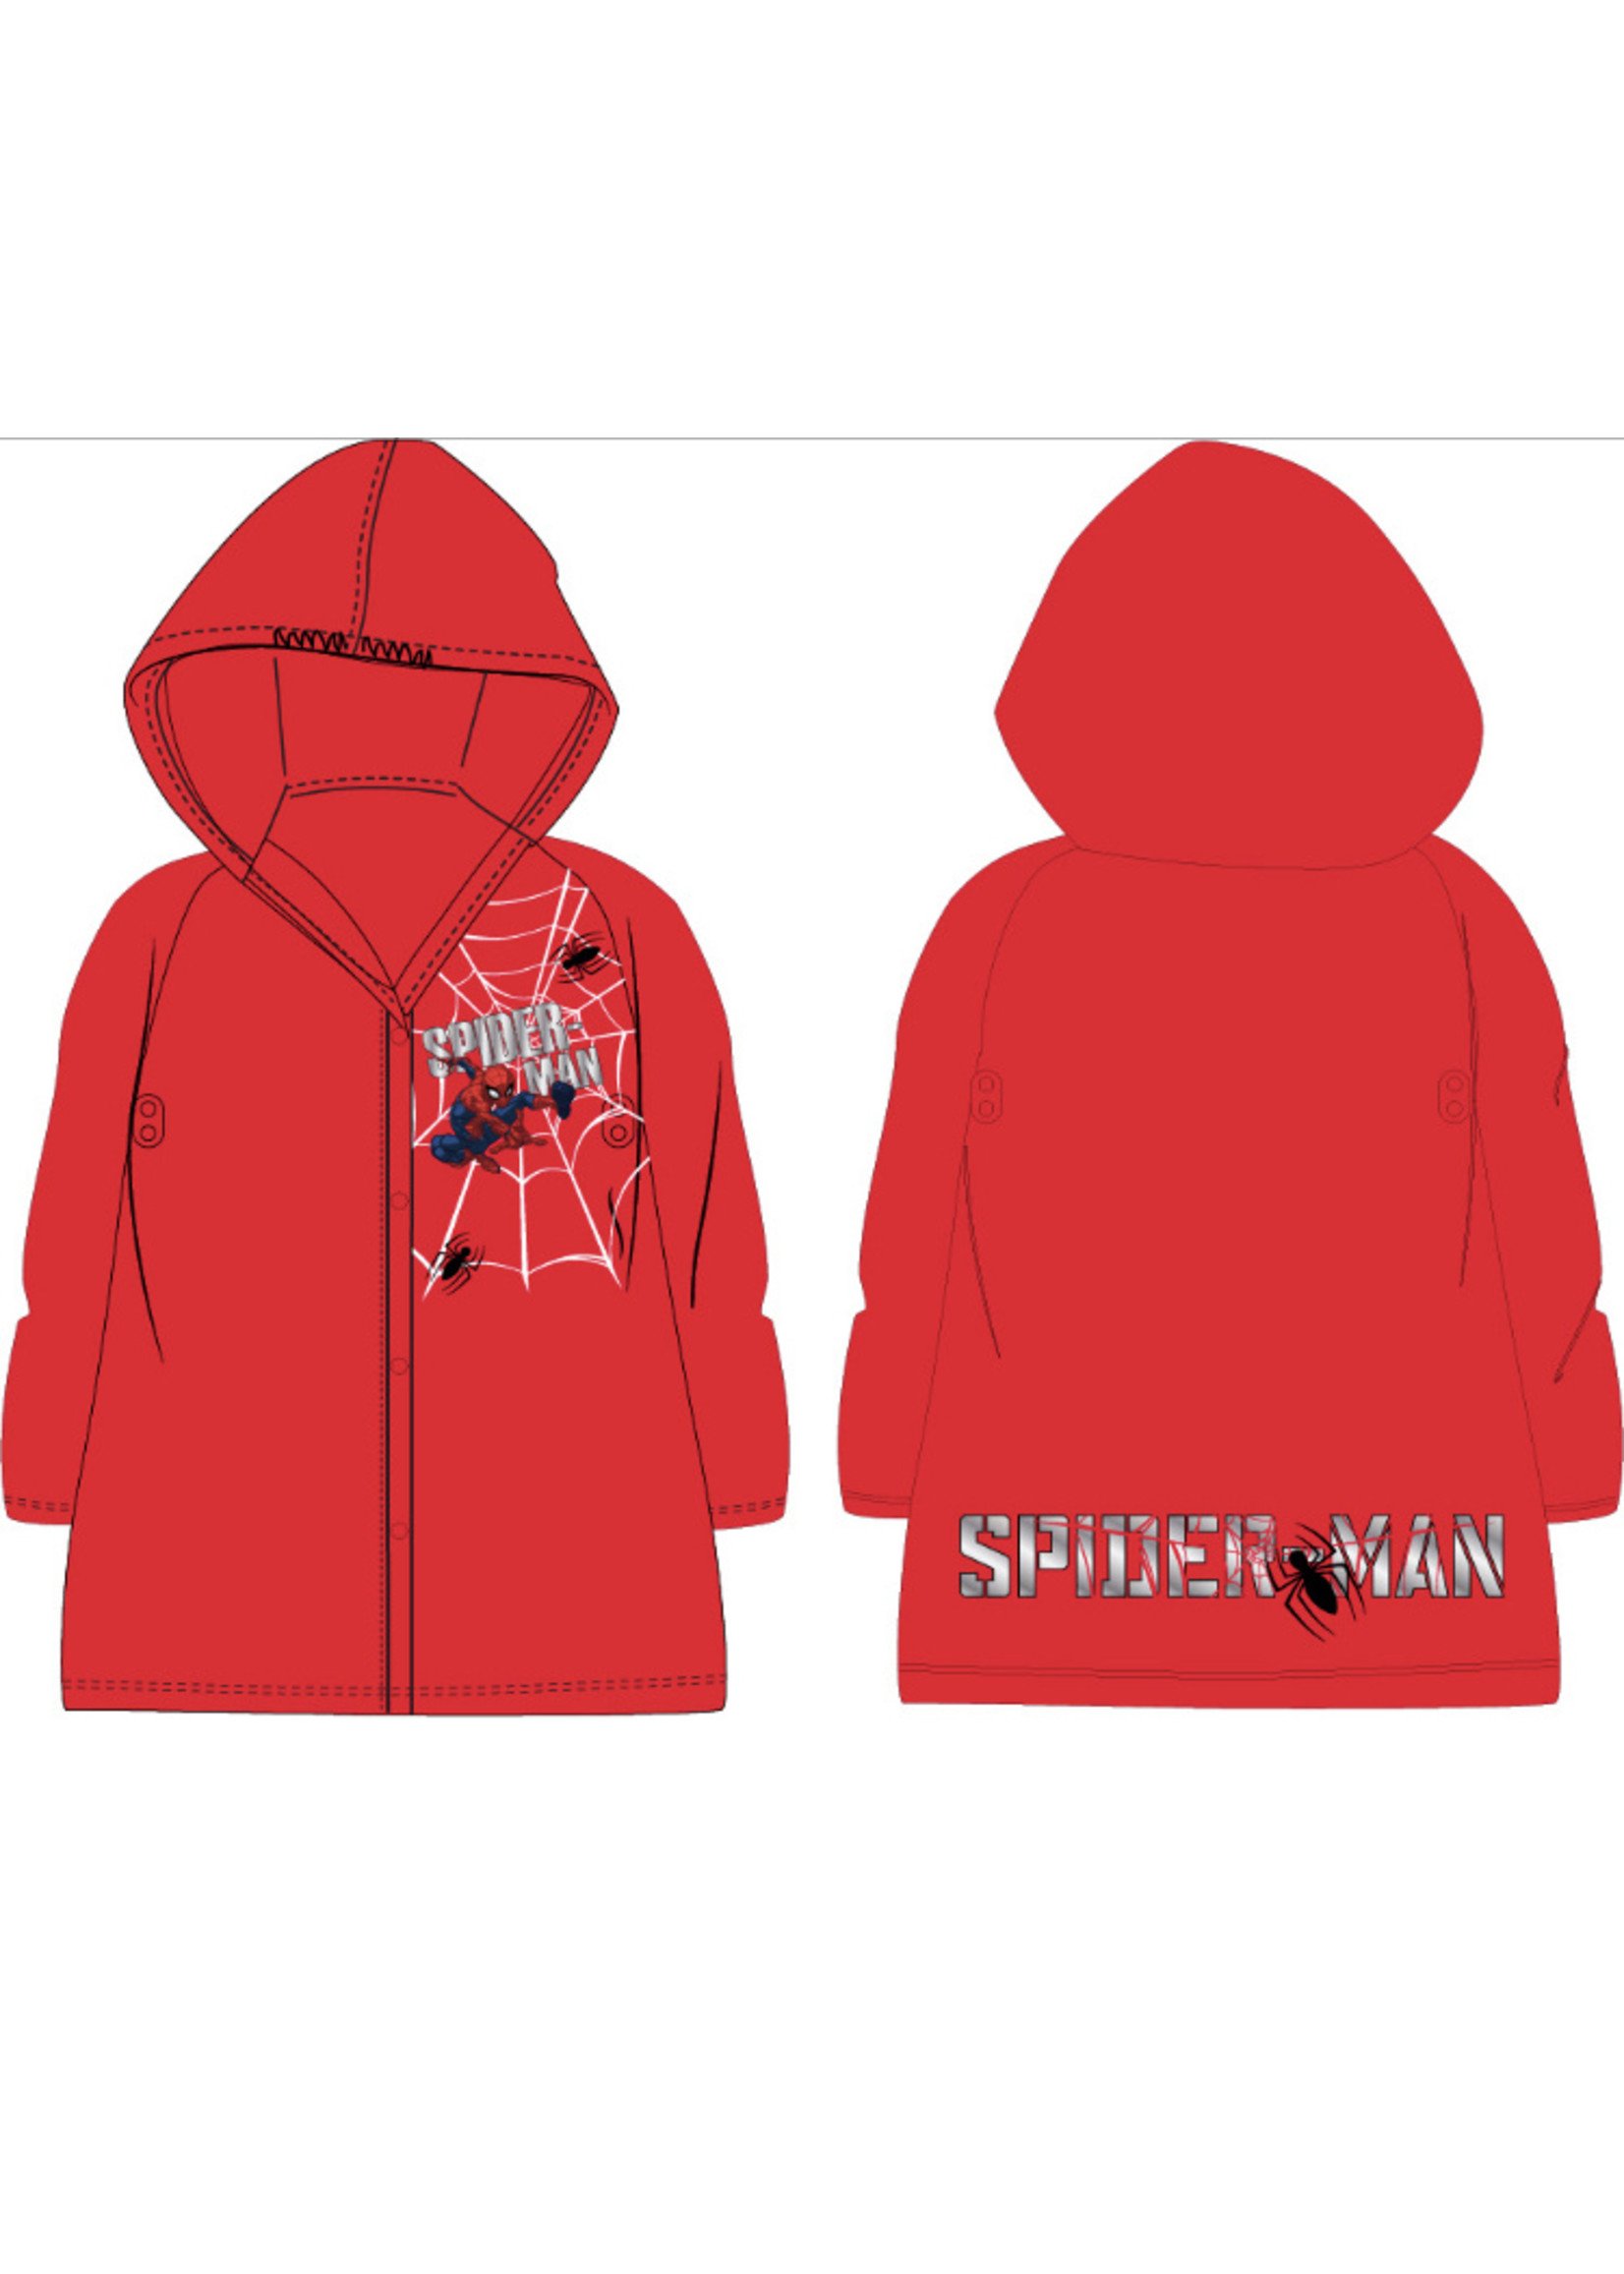 Marvel Spiderman raincoat from Marvel red